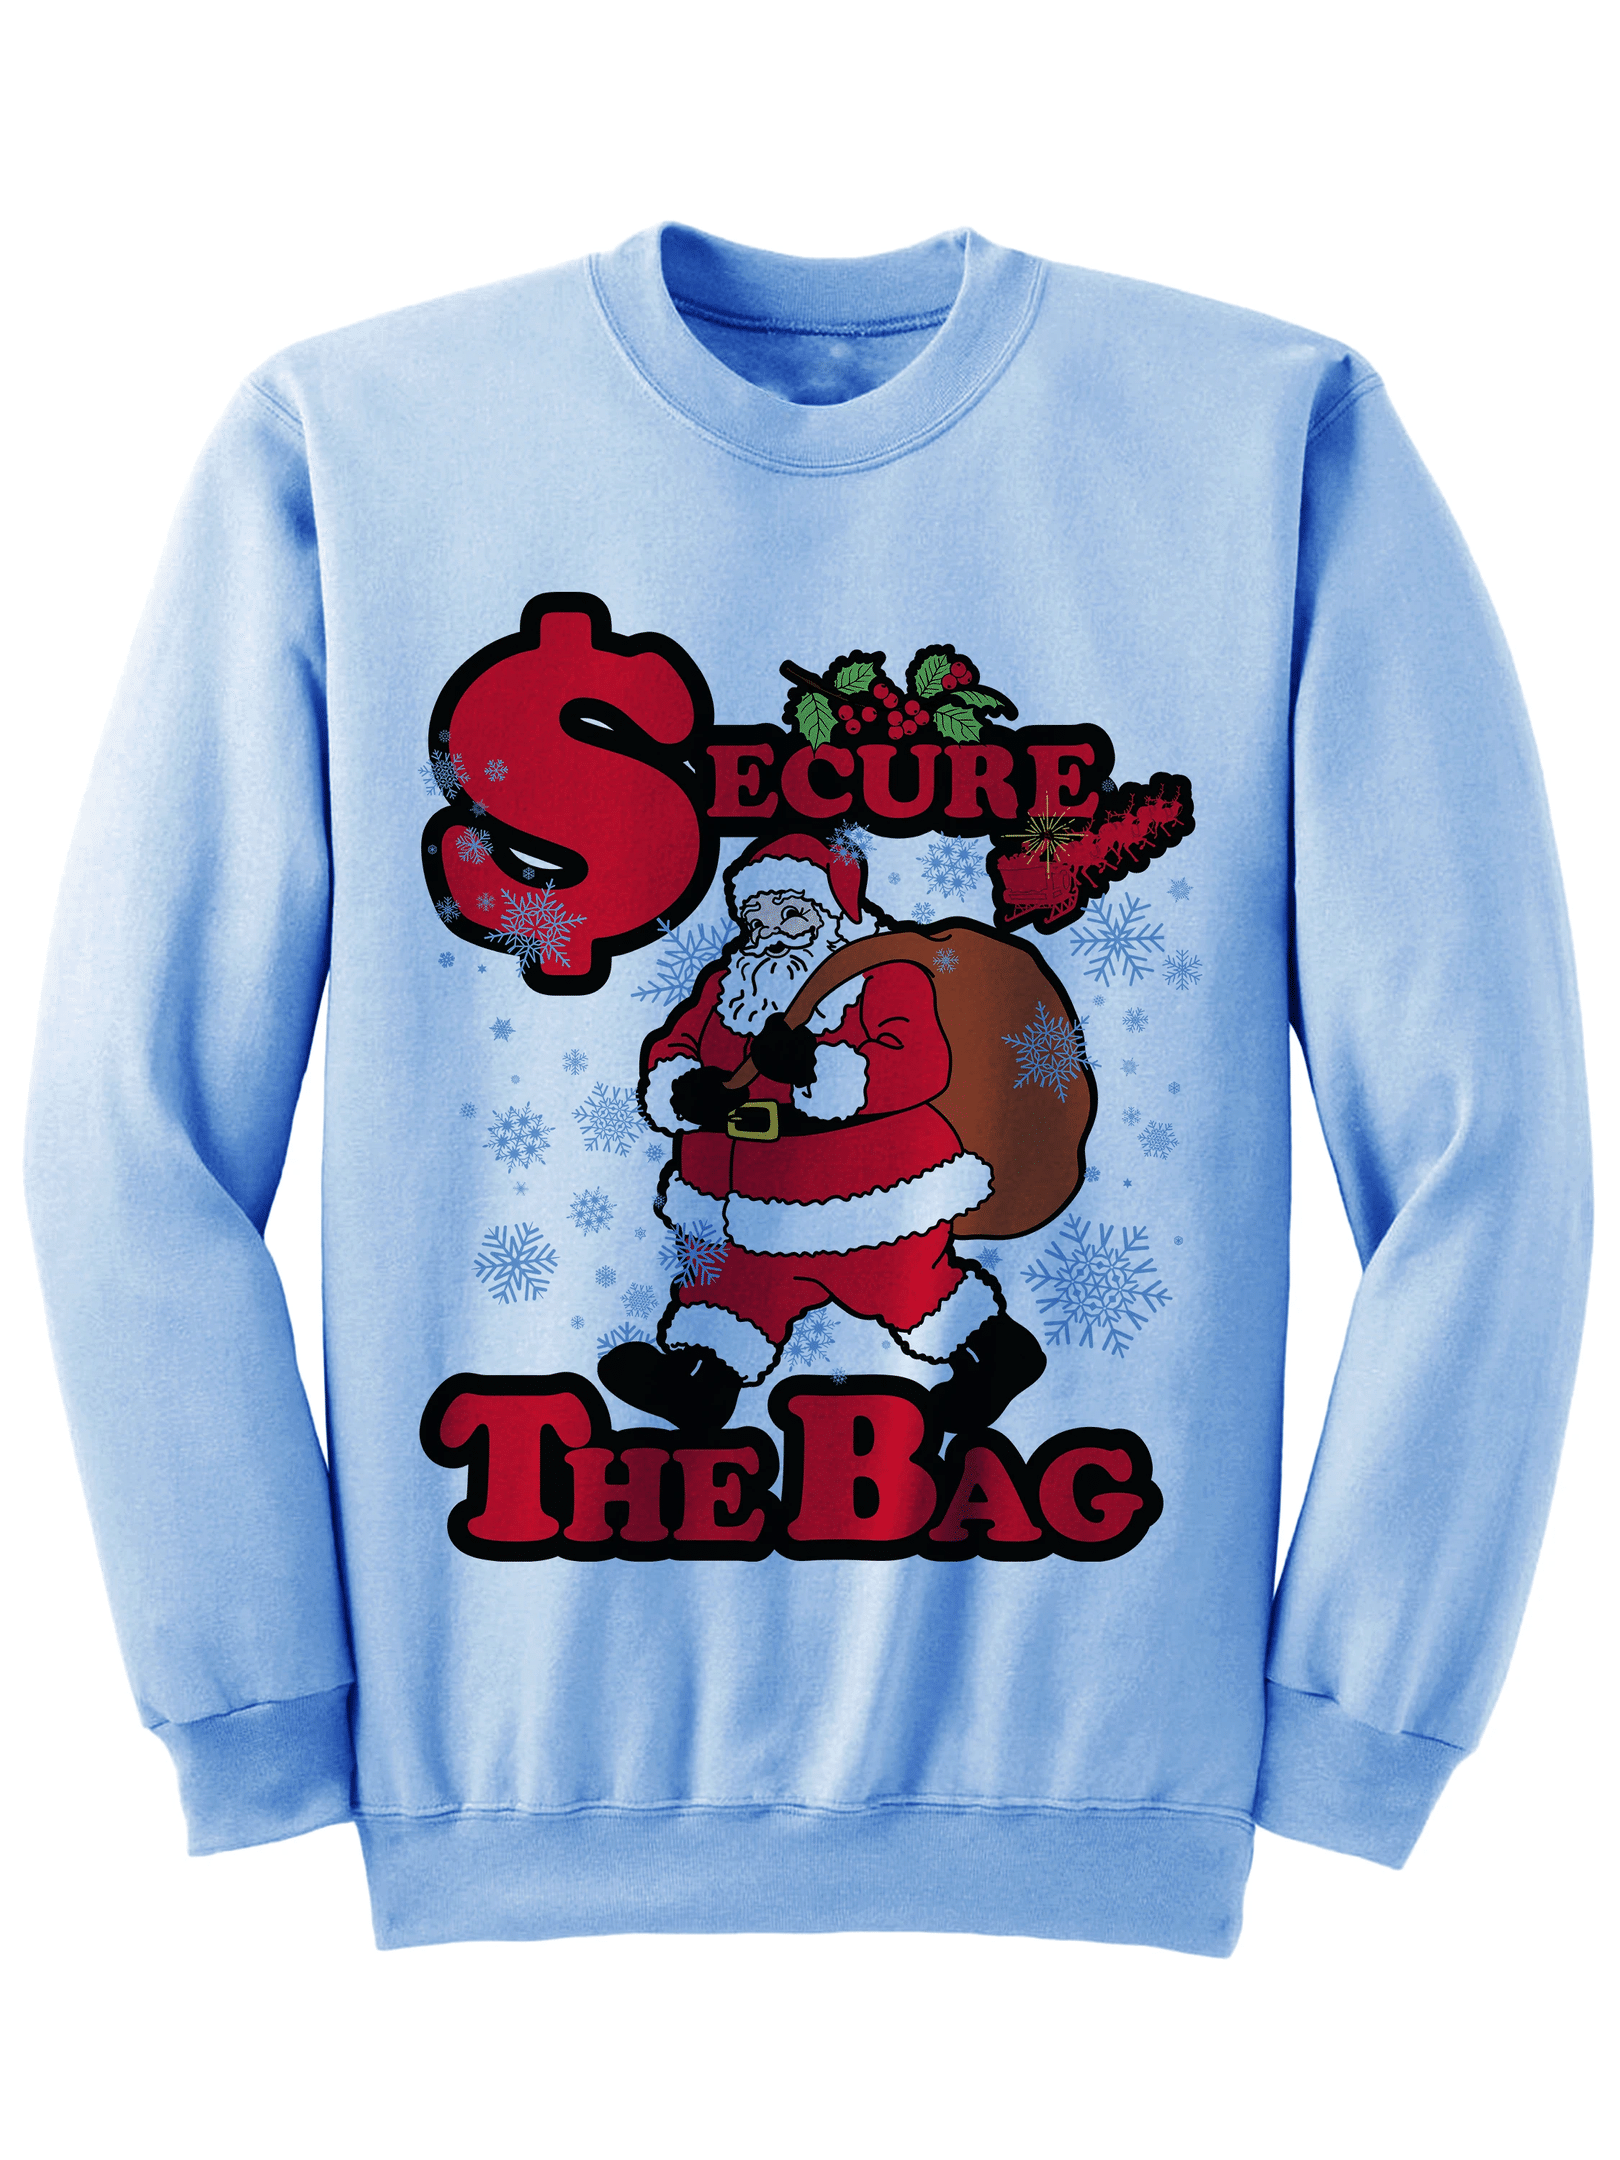 Secure The Bag Santa Claus Christmas Sweatshirt Style: Sweatshirt, Color: Blue